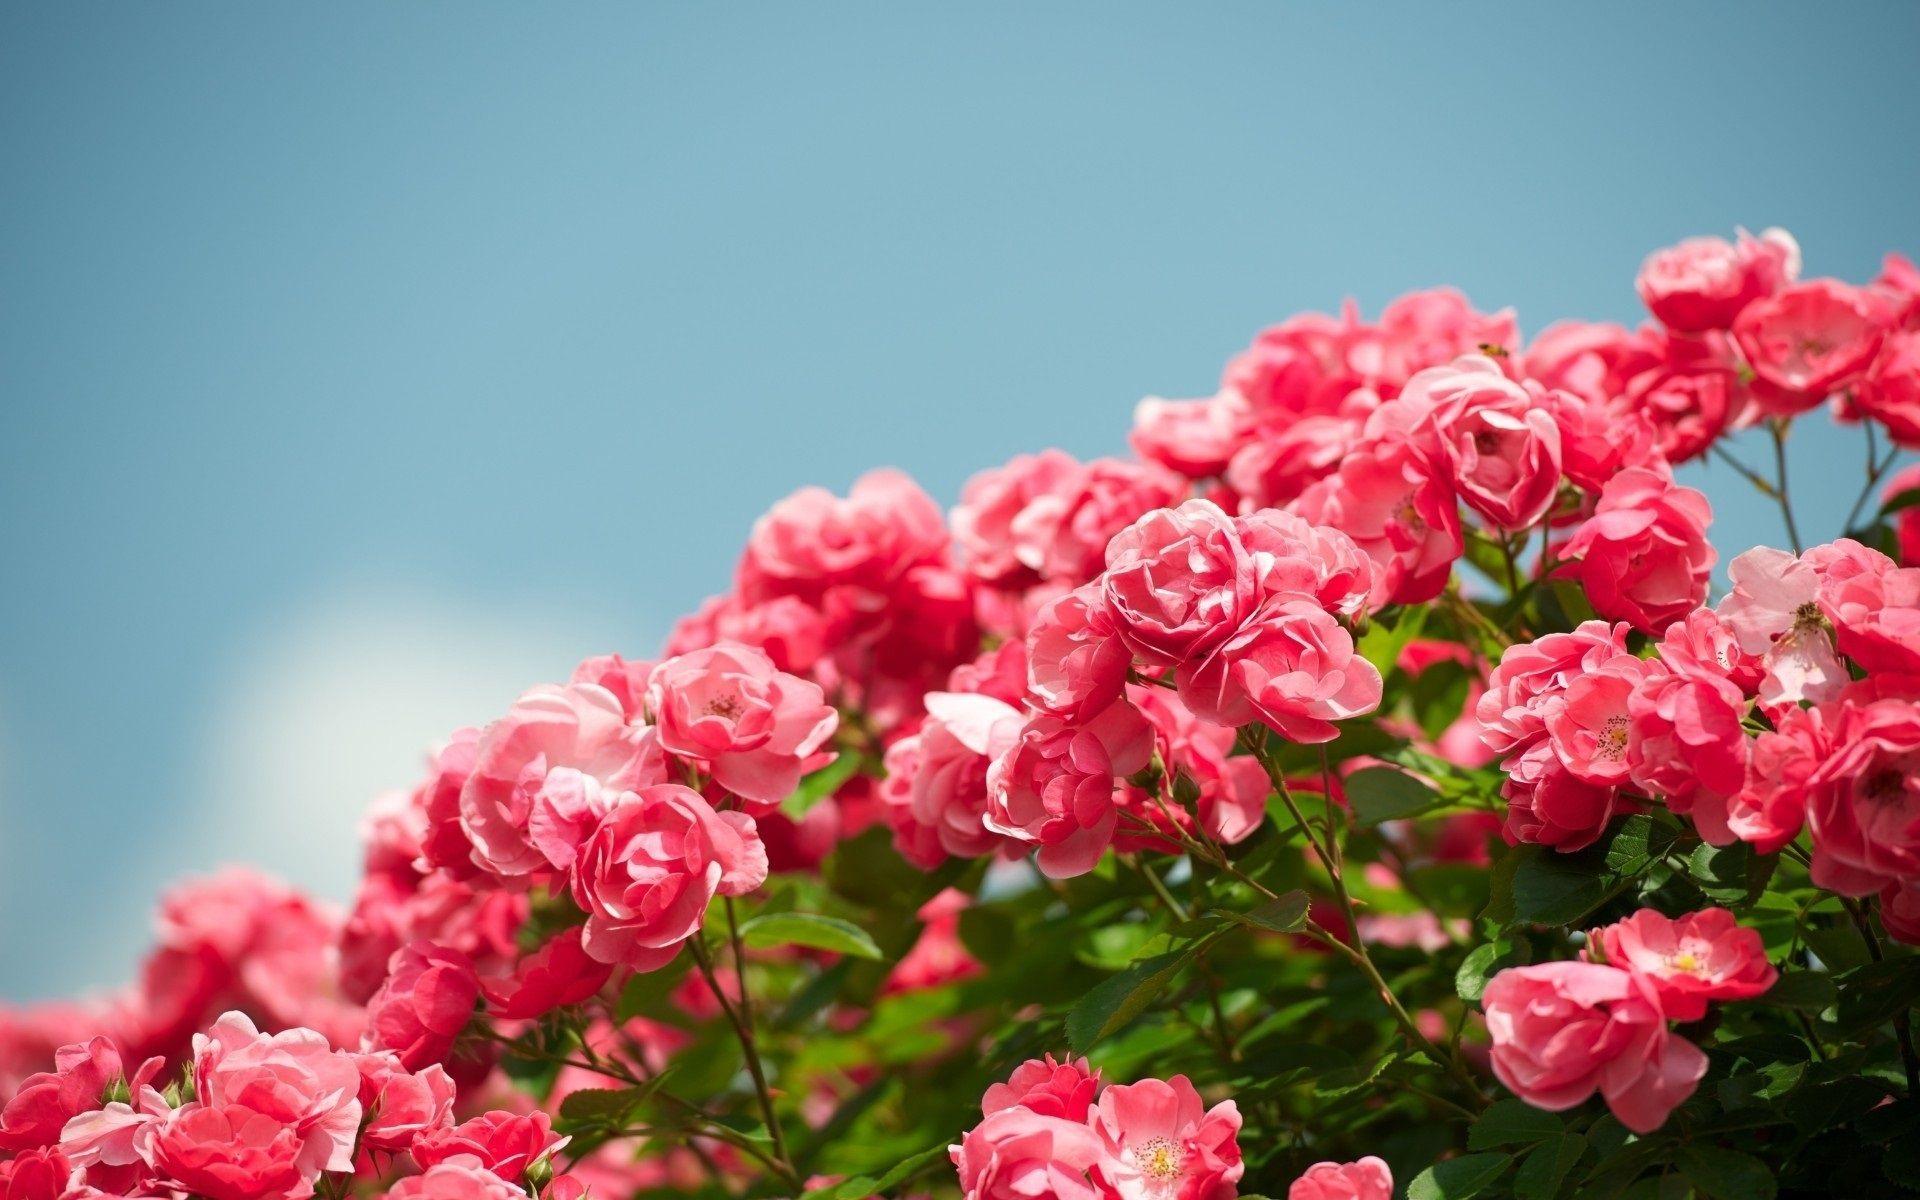 Garden flowers, beautiful red rose wallpaper. flowers. Wallpaper